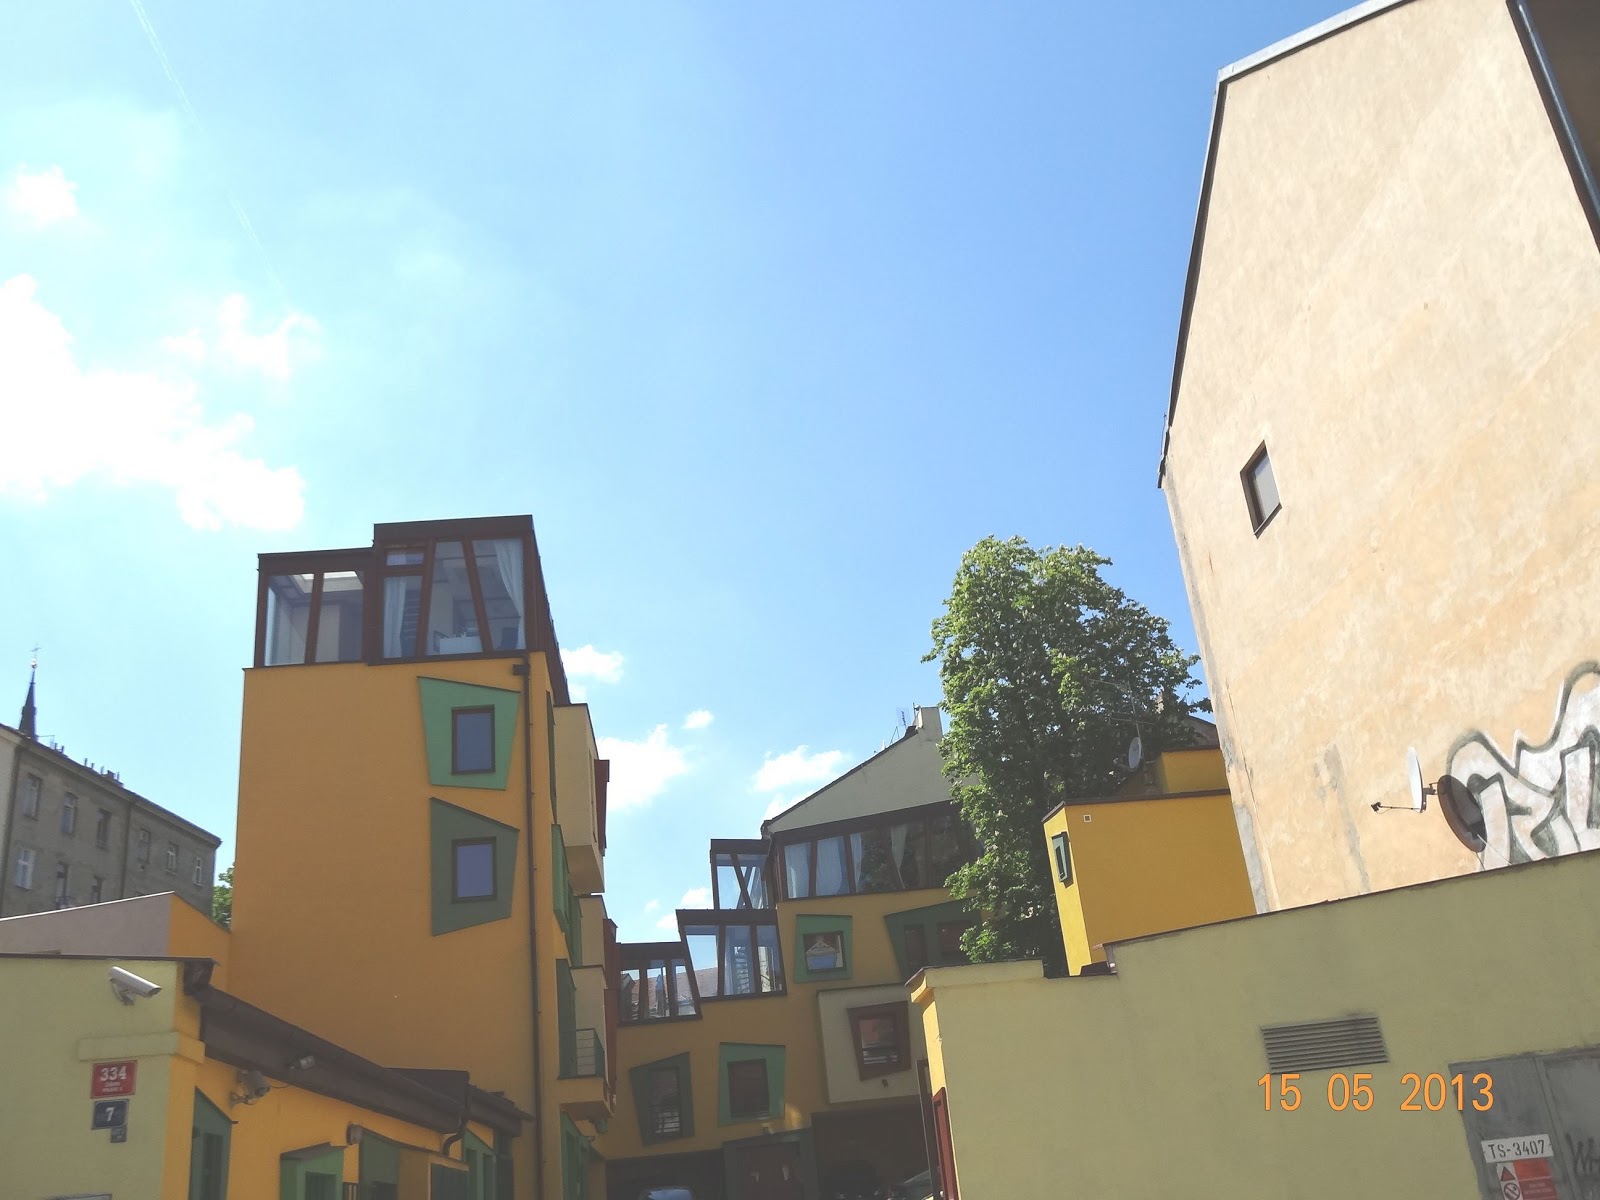 New Žižkov courtyards and balconies